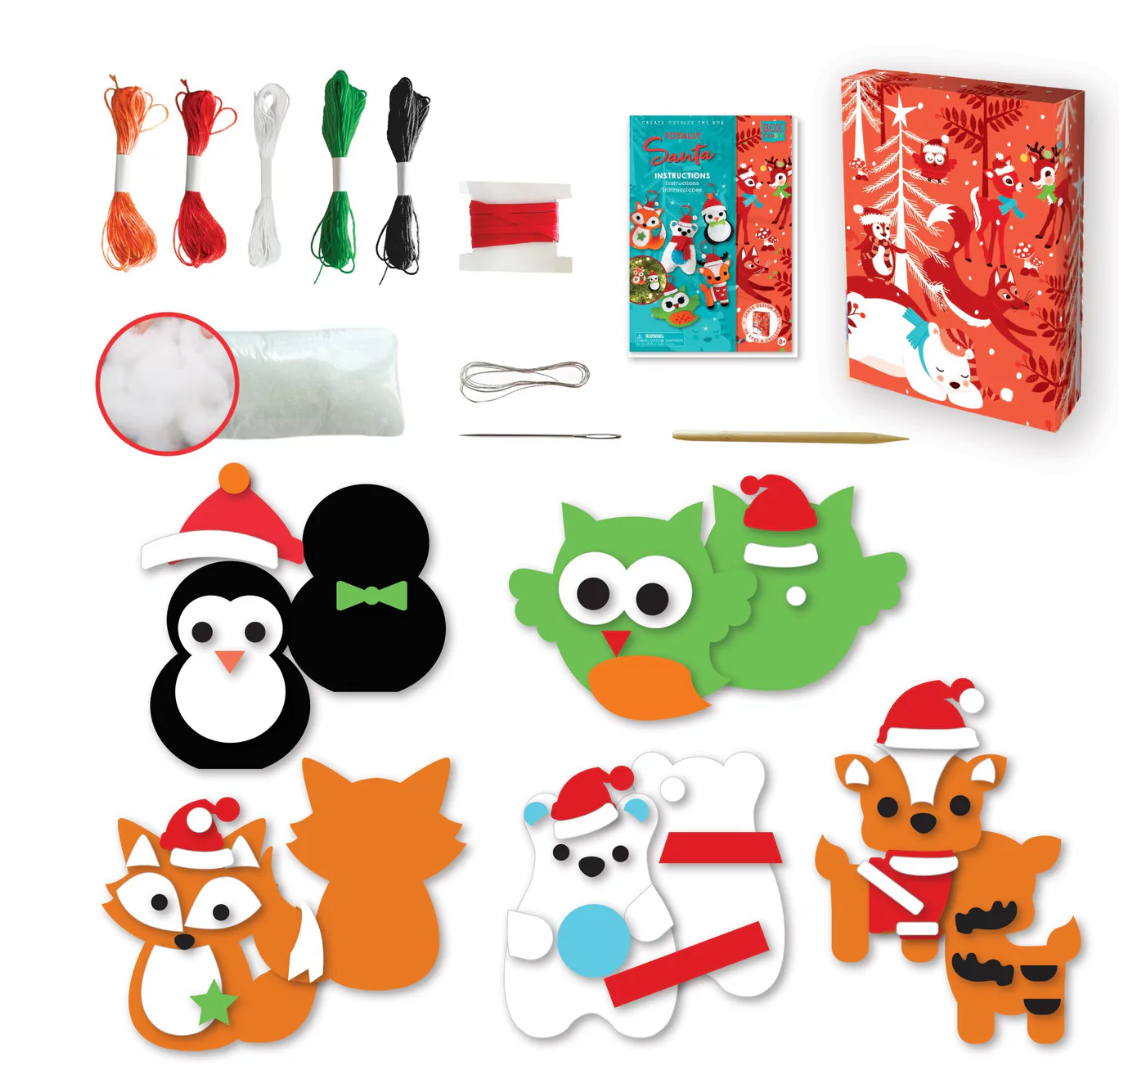 Make Your Own Felt Ornaments Kit